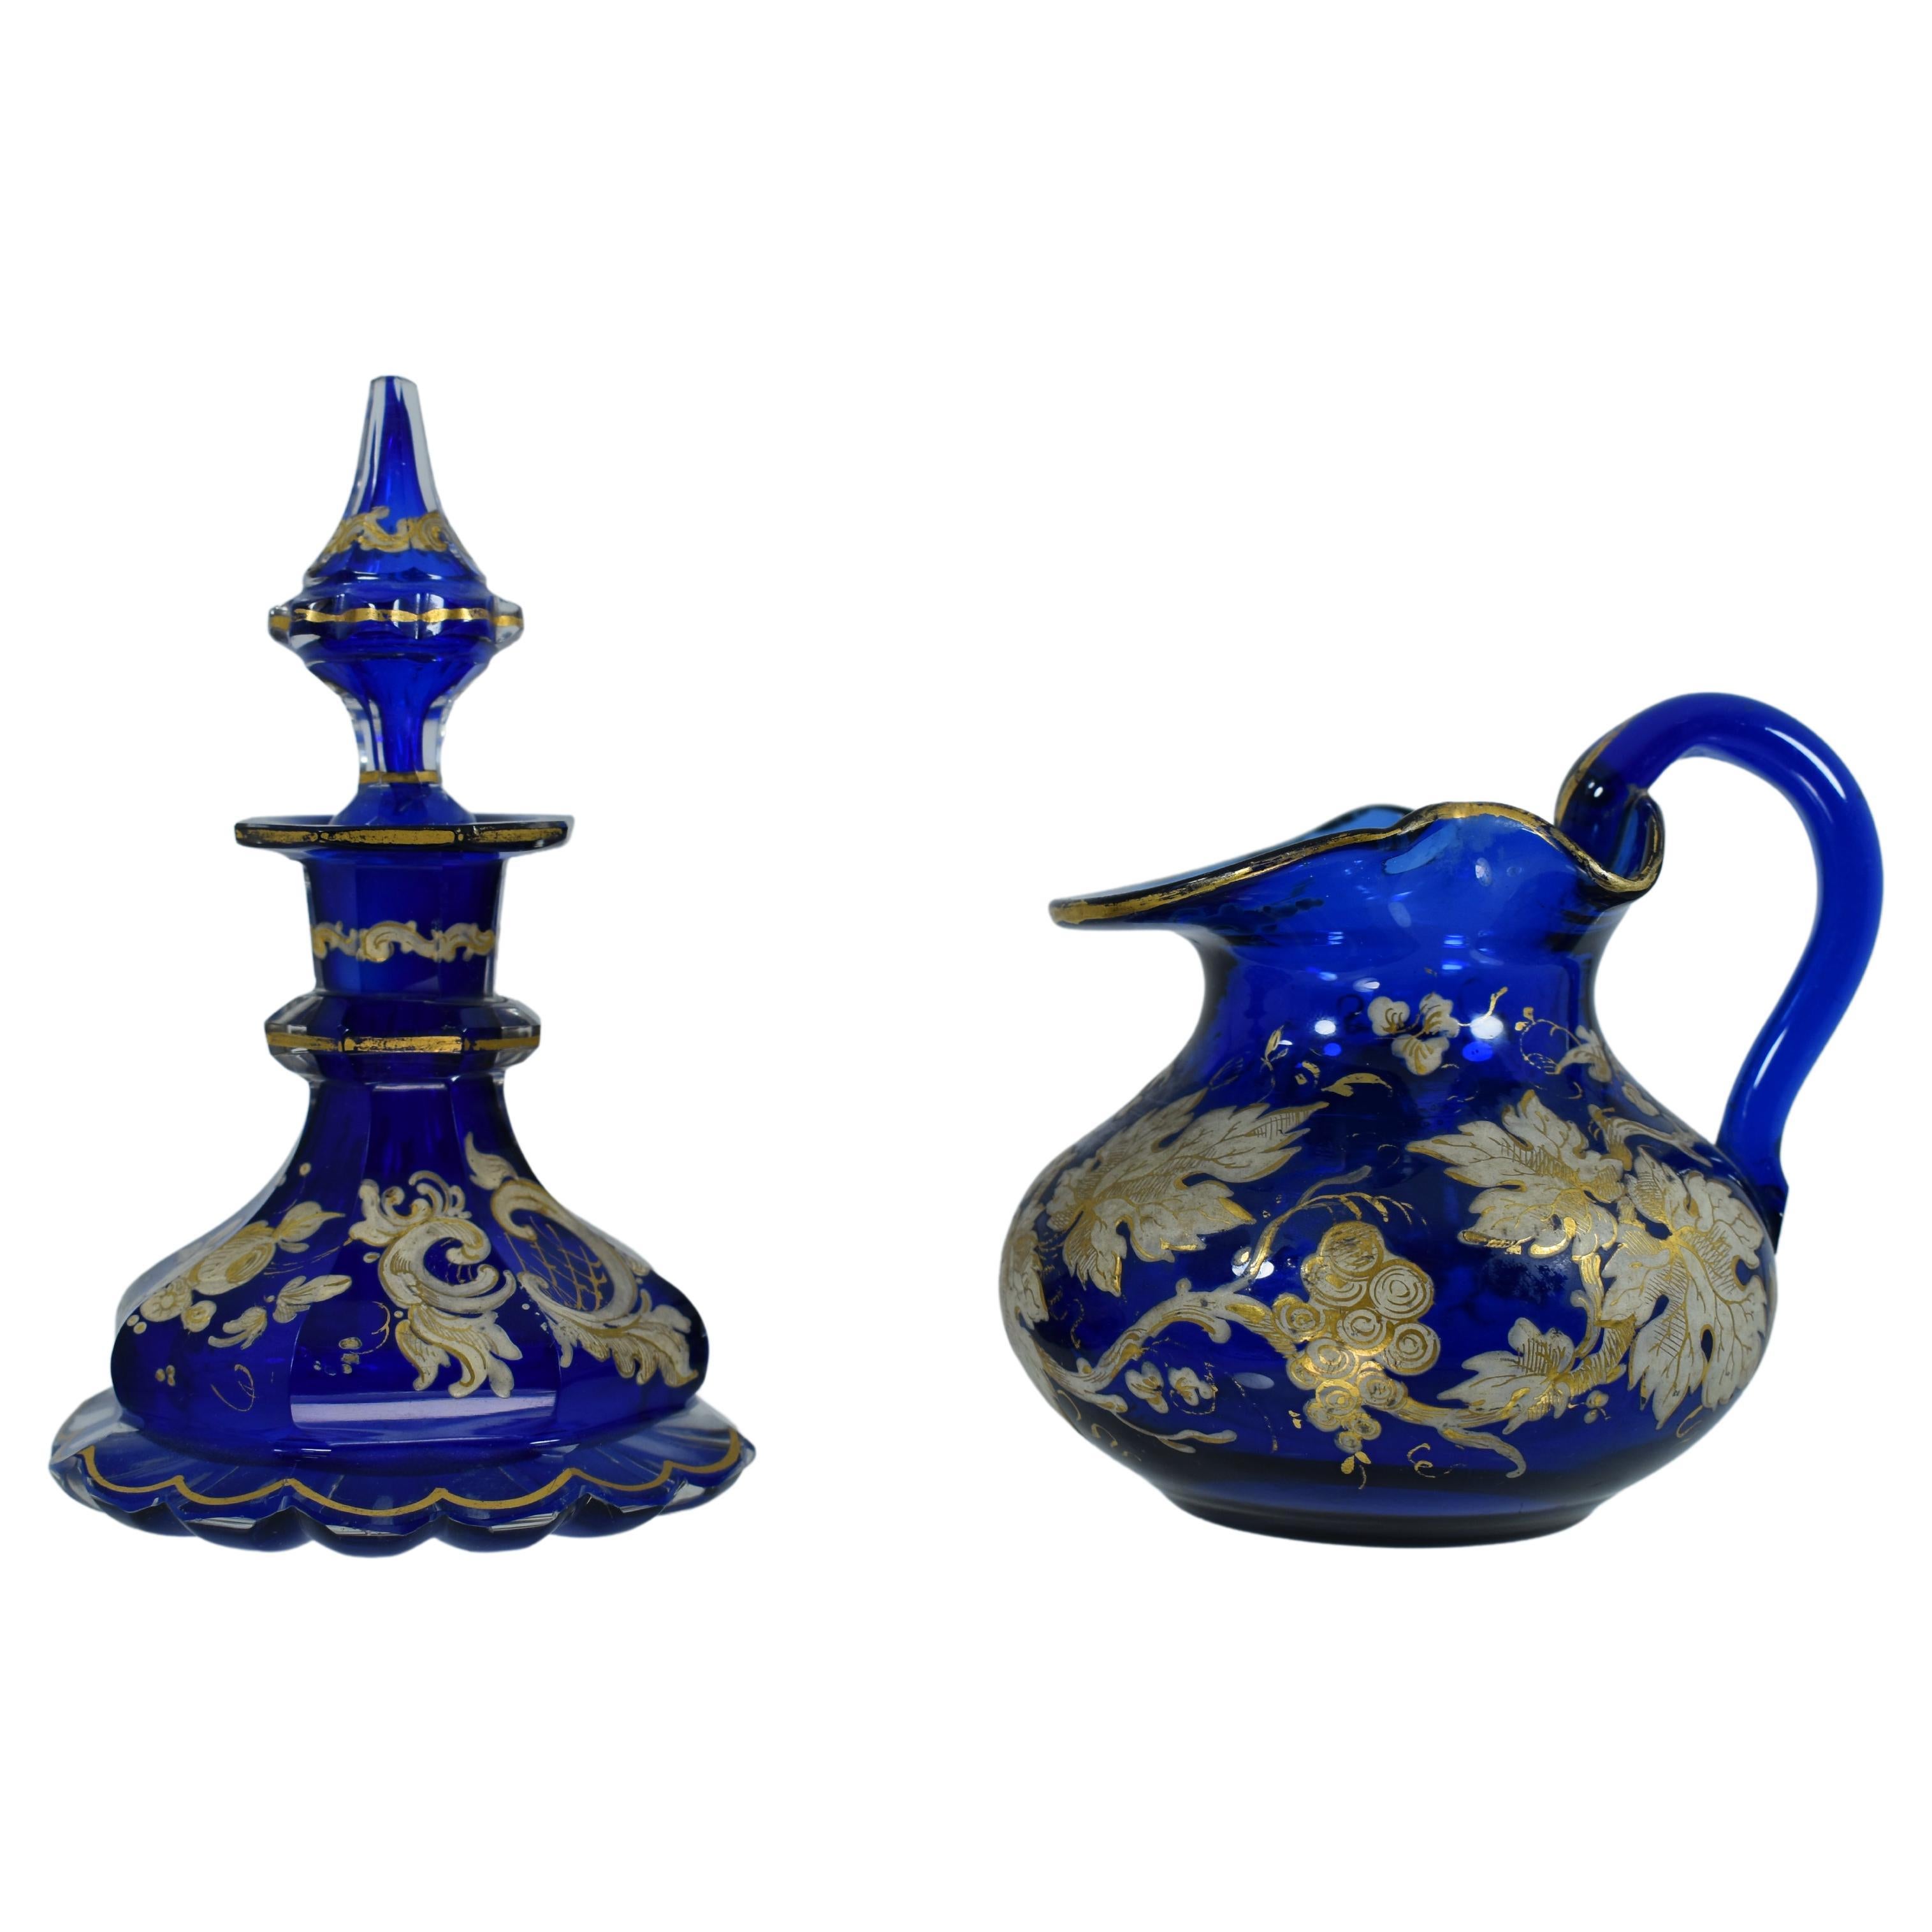 Antique Bohemian Cobalt Blue Enameled Glass Perfume Bottle and Jug, 19th Century